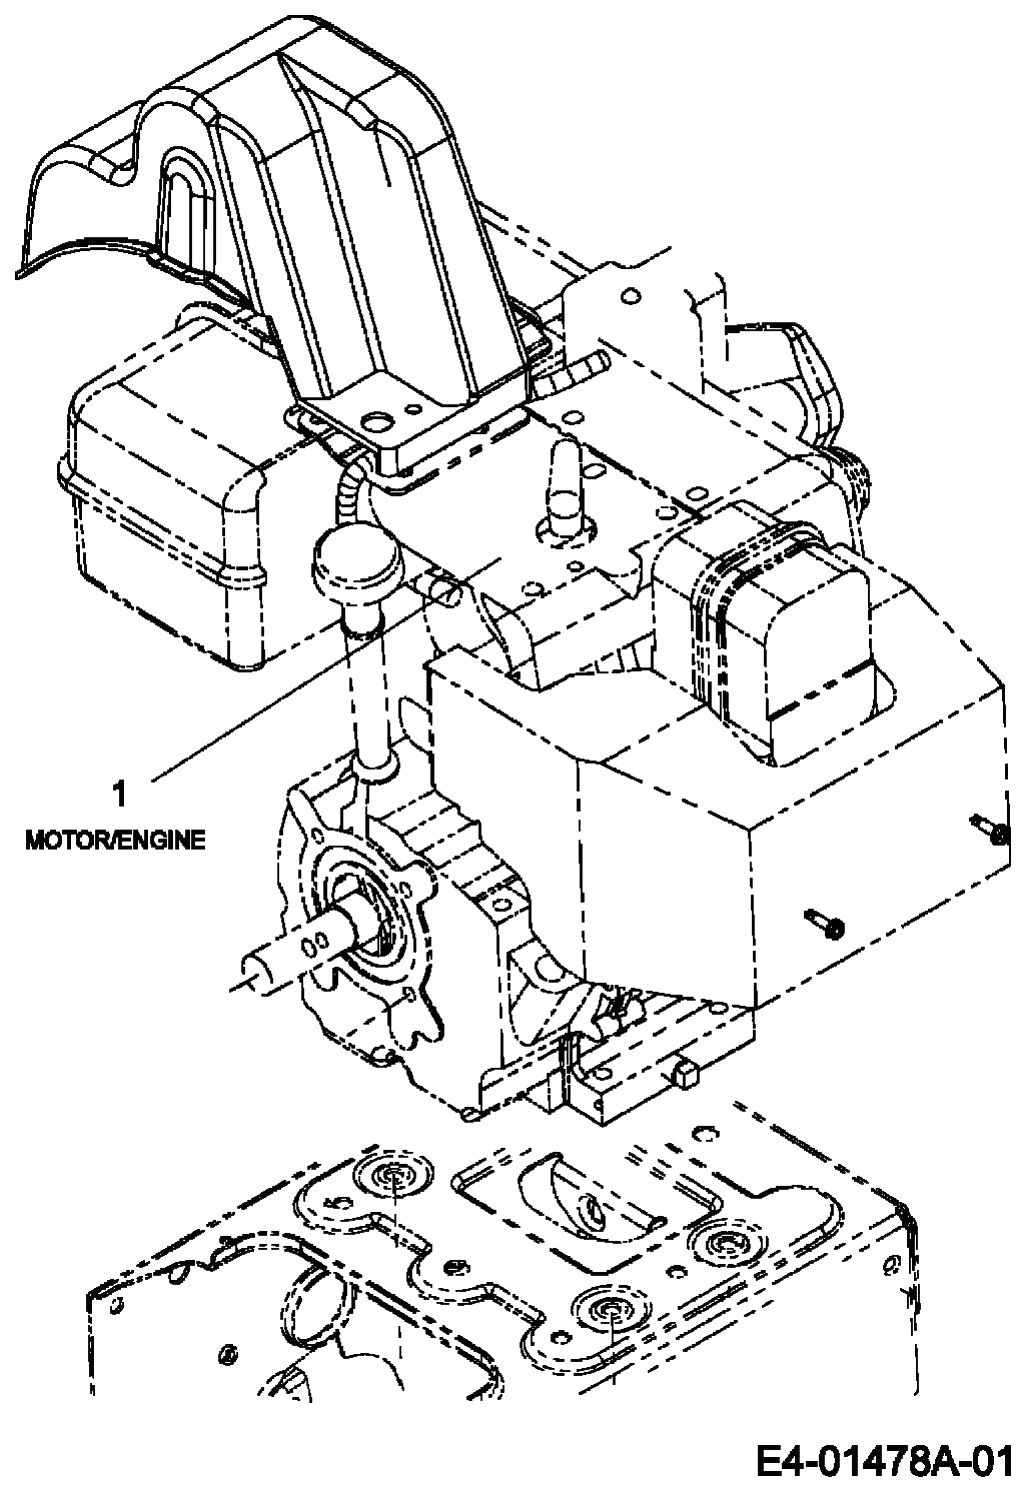 MTD Артикул 31AV6FHF678 (год выпуска 2007). Двигатель